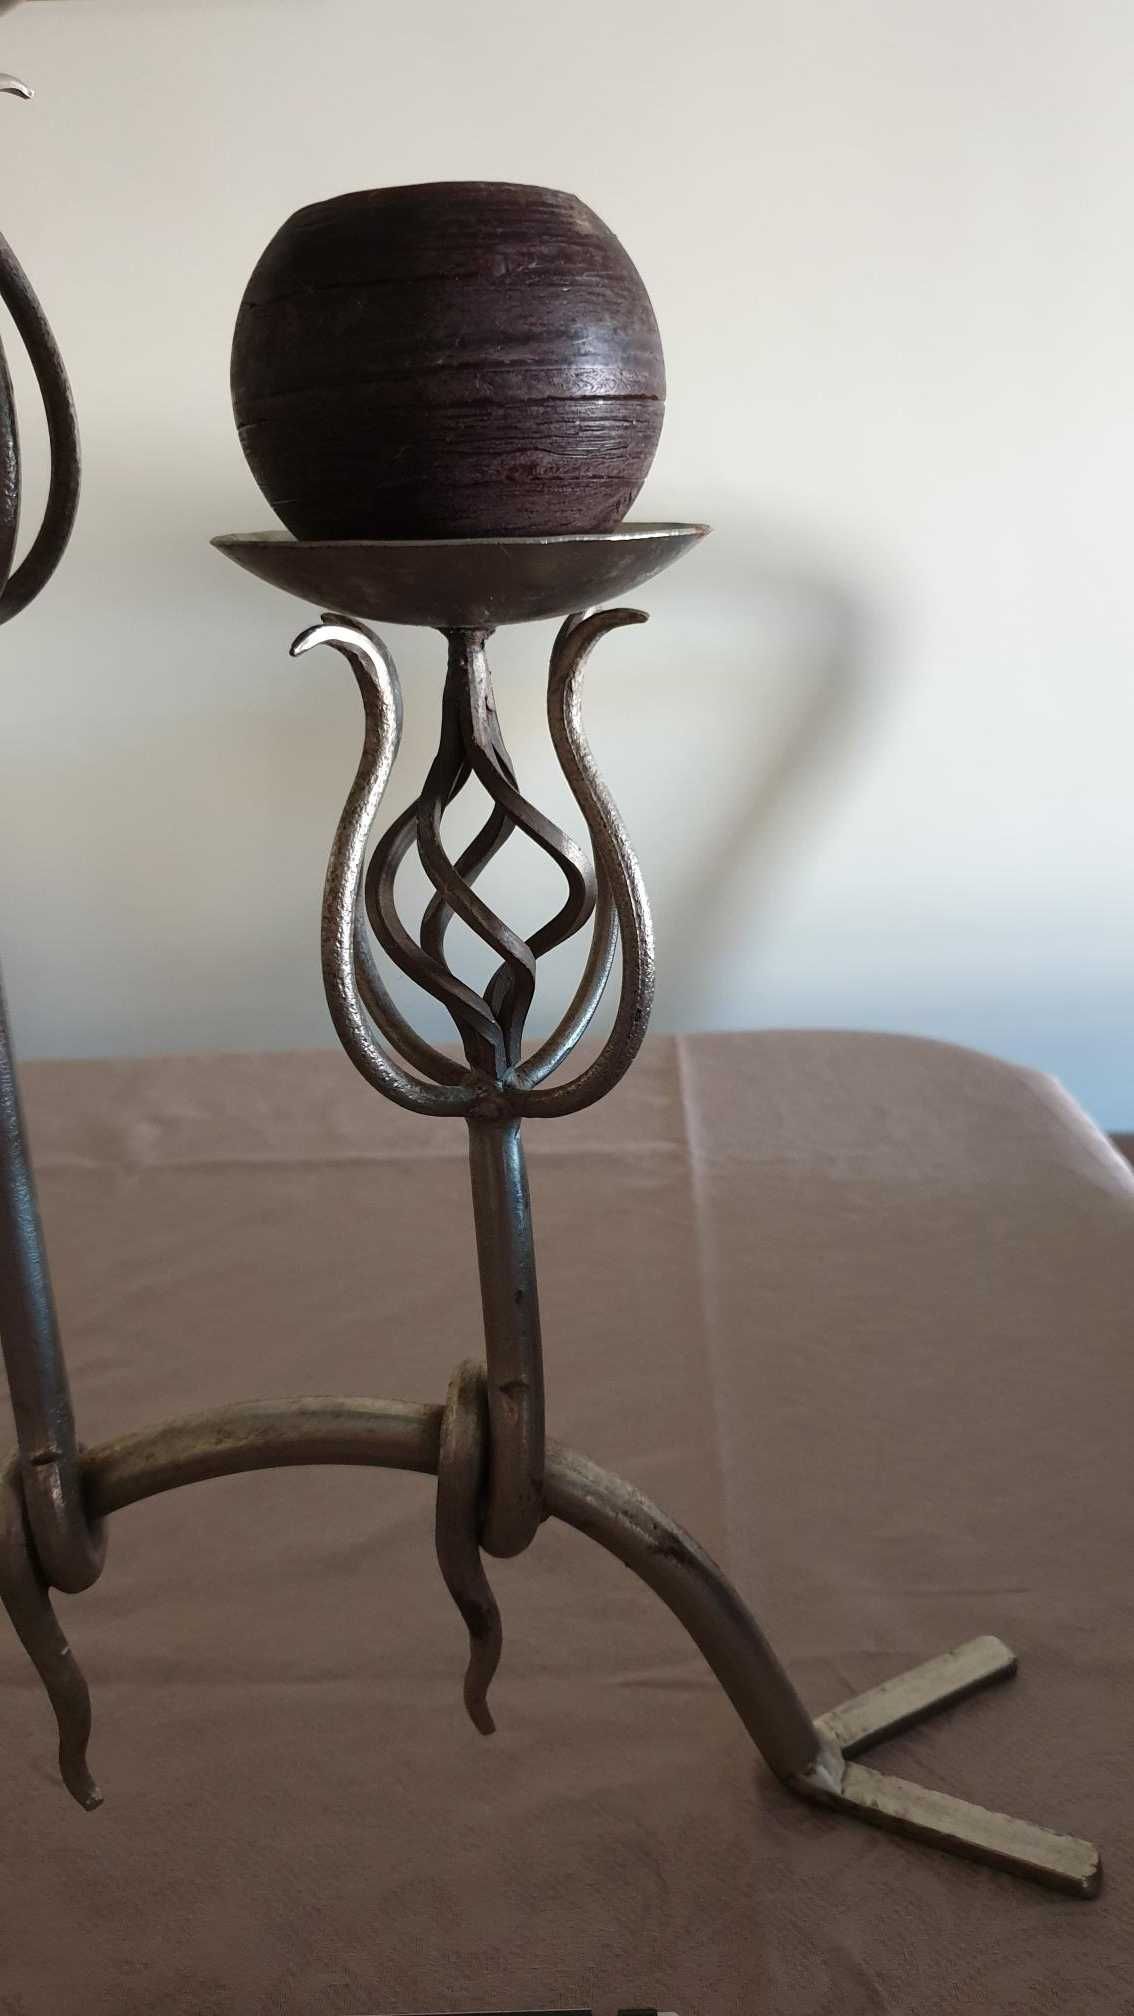 Candelabro vintage para velas em ferro forjado (novo) - Novo preço